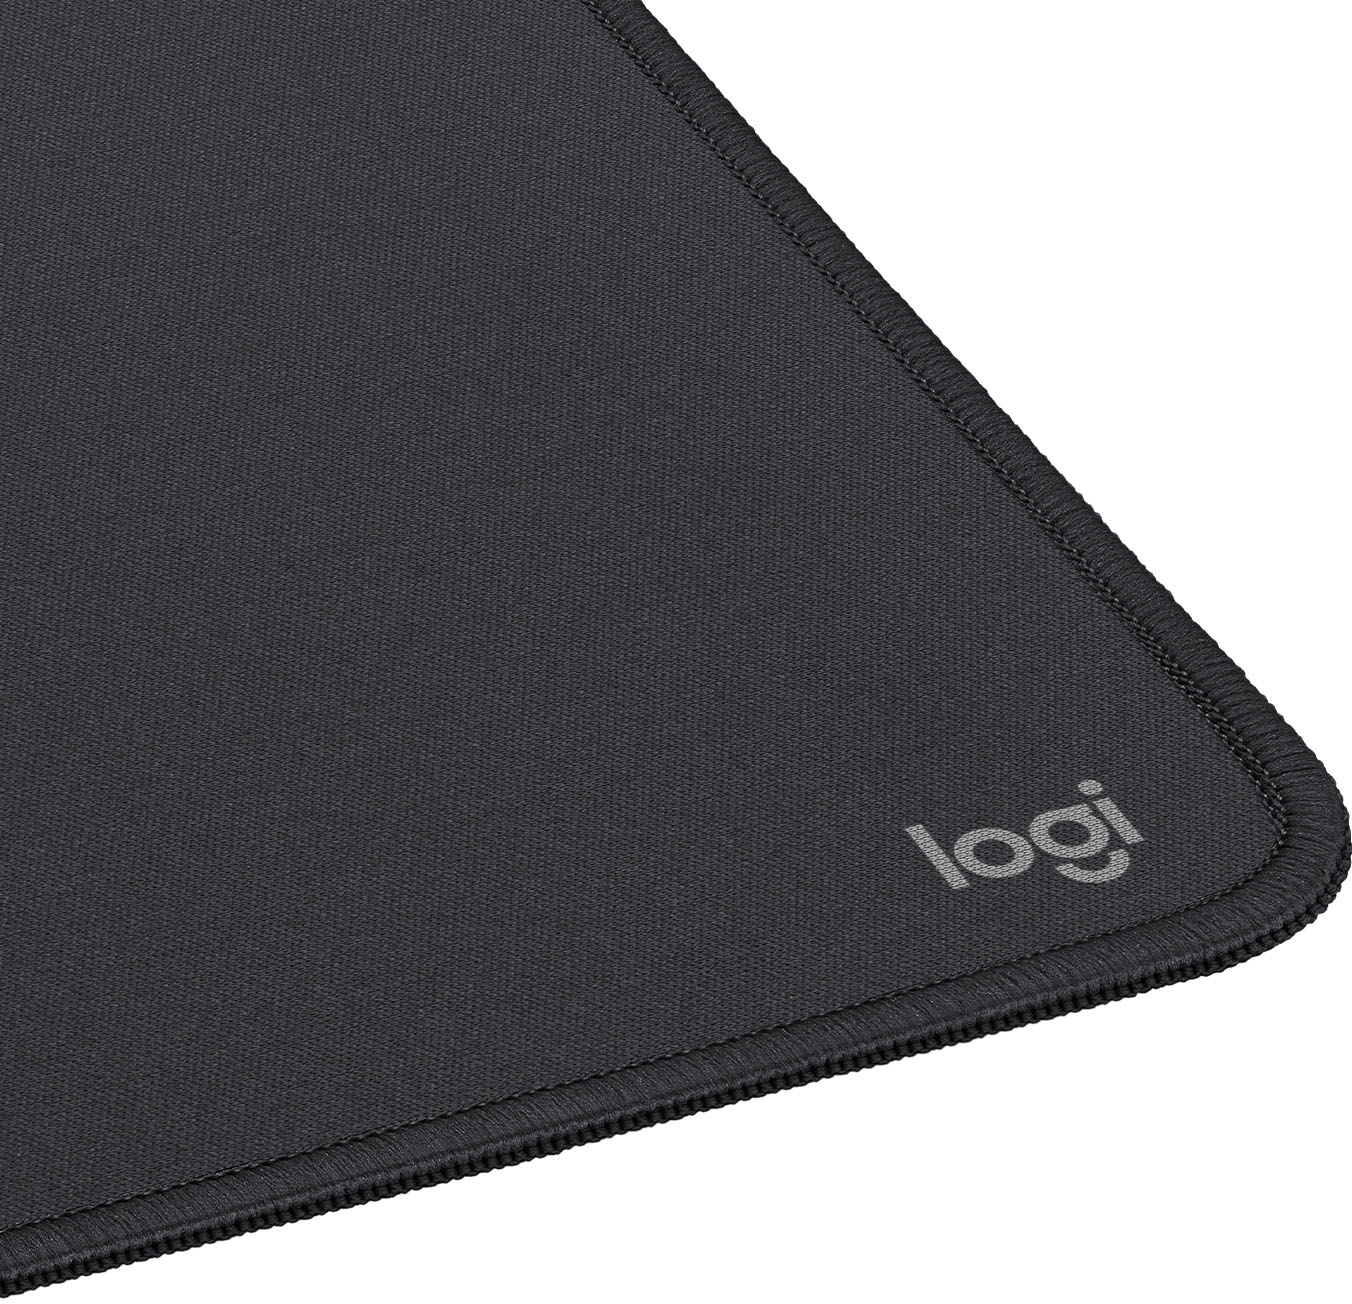 Logitech Desk Mat Studio Series Extended Mouse Pad with Spill-resistant  Durable Design (Large) Lavender 956-000036 - Best Buy